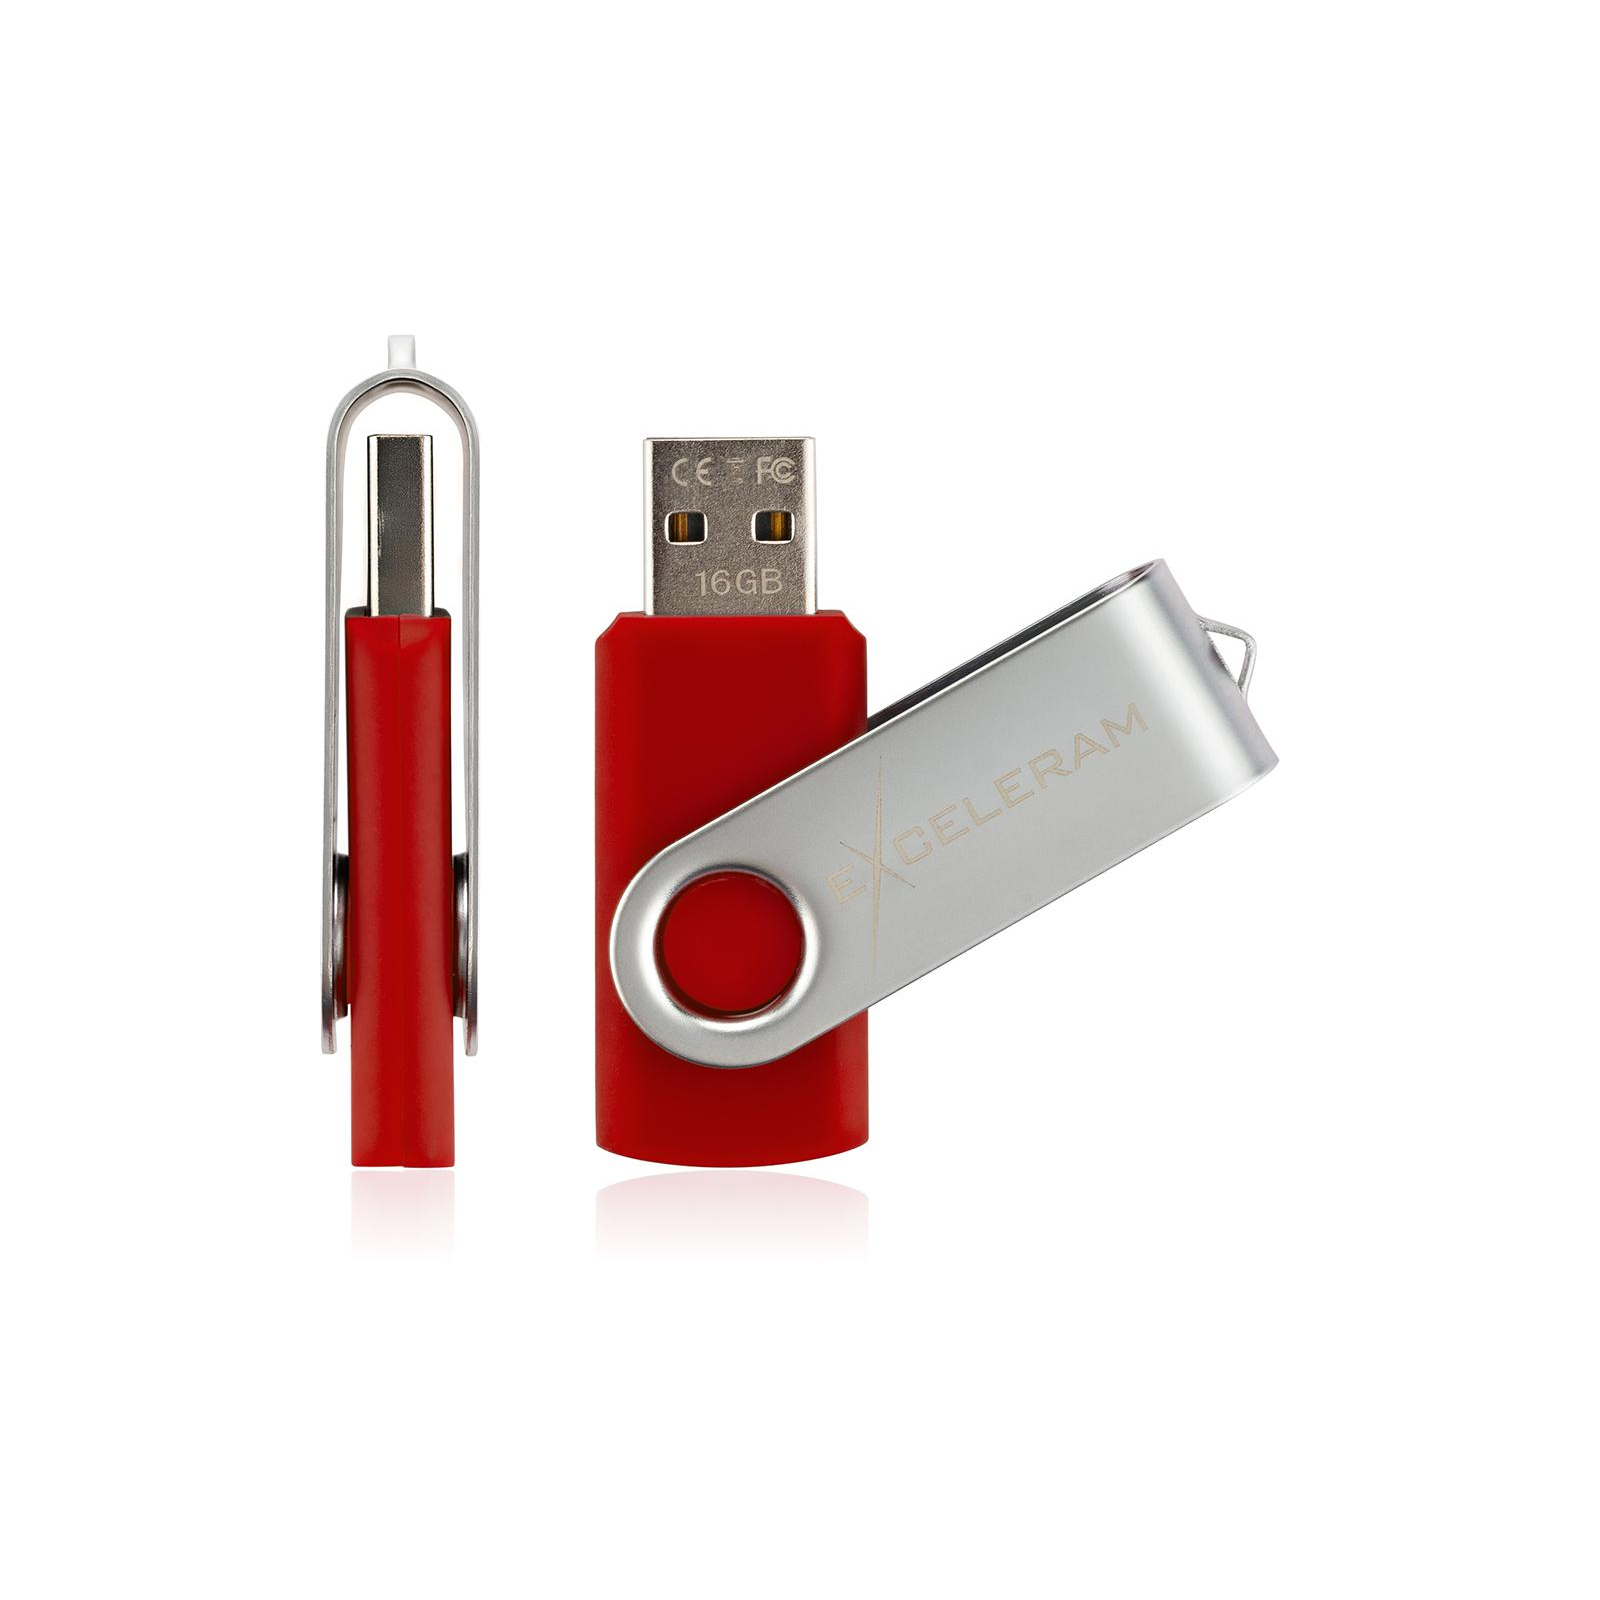 USB флеш накопитель eXceleram 8GB P1 Series Silver/Black USB 2.0 (EXP1U2SIB08) изображение 4